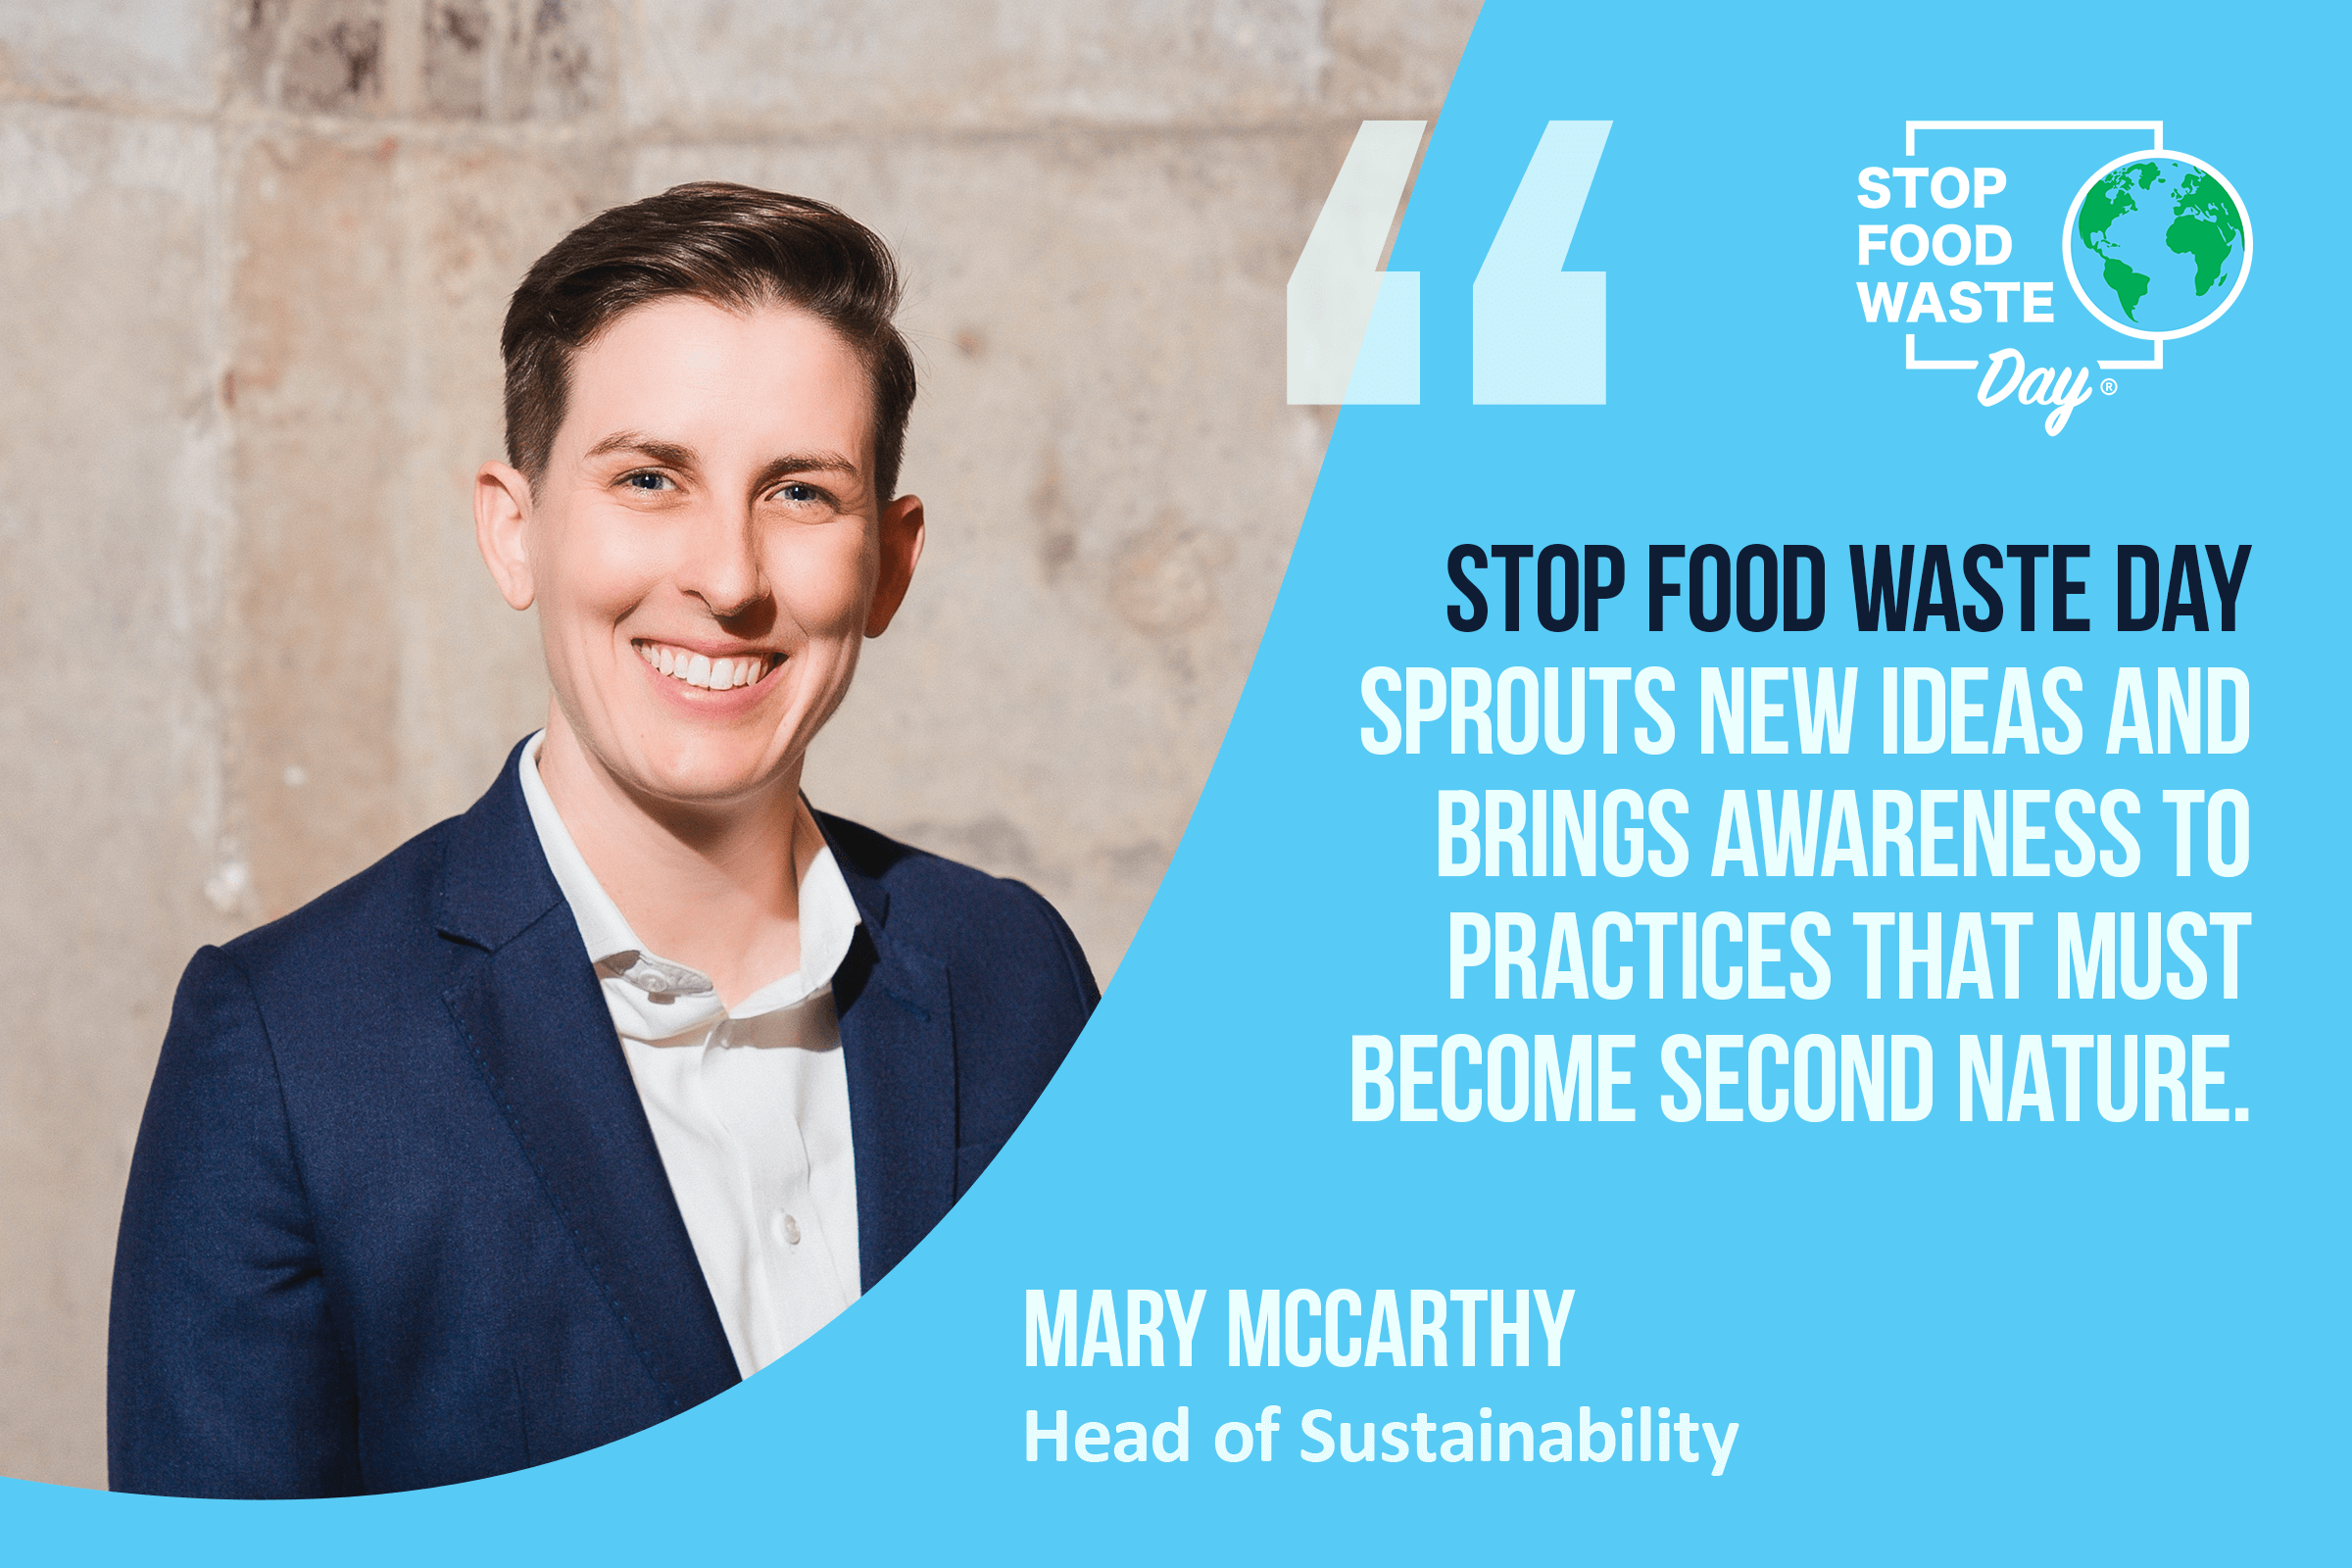 Mary McCarthy, VP of Sustainability